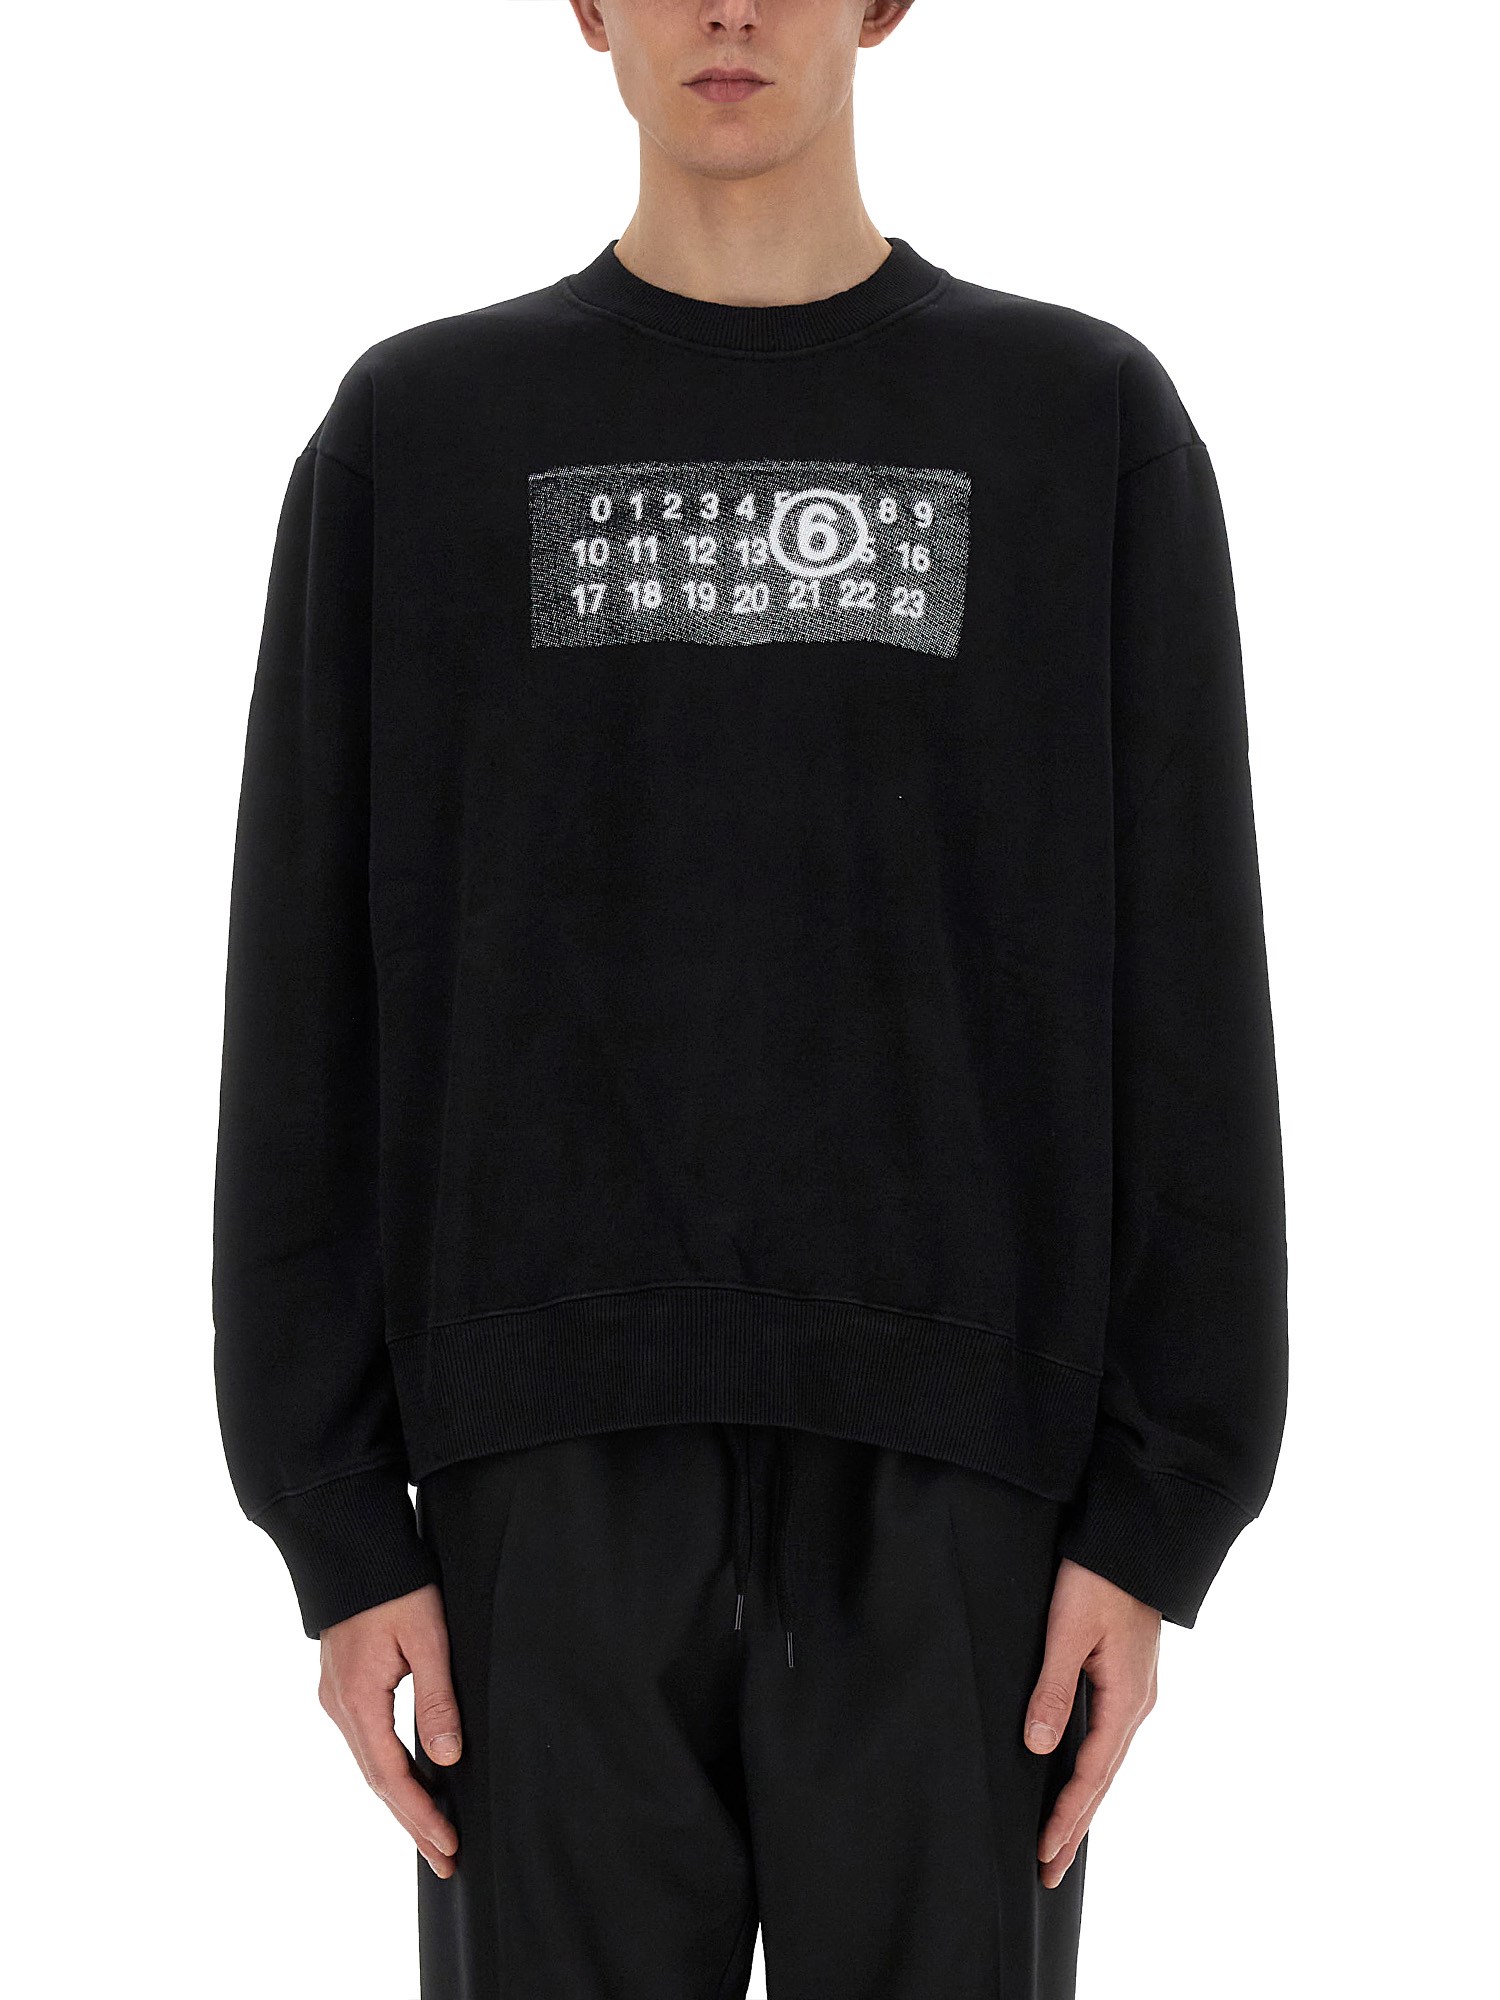 mm6 maison margiela sweatshirt with rasterized zipper prints